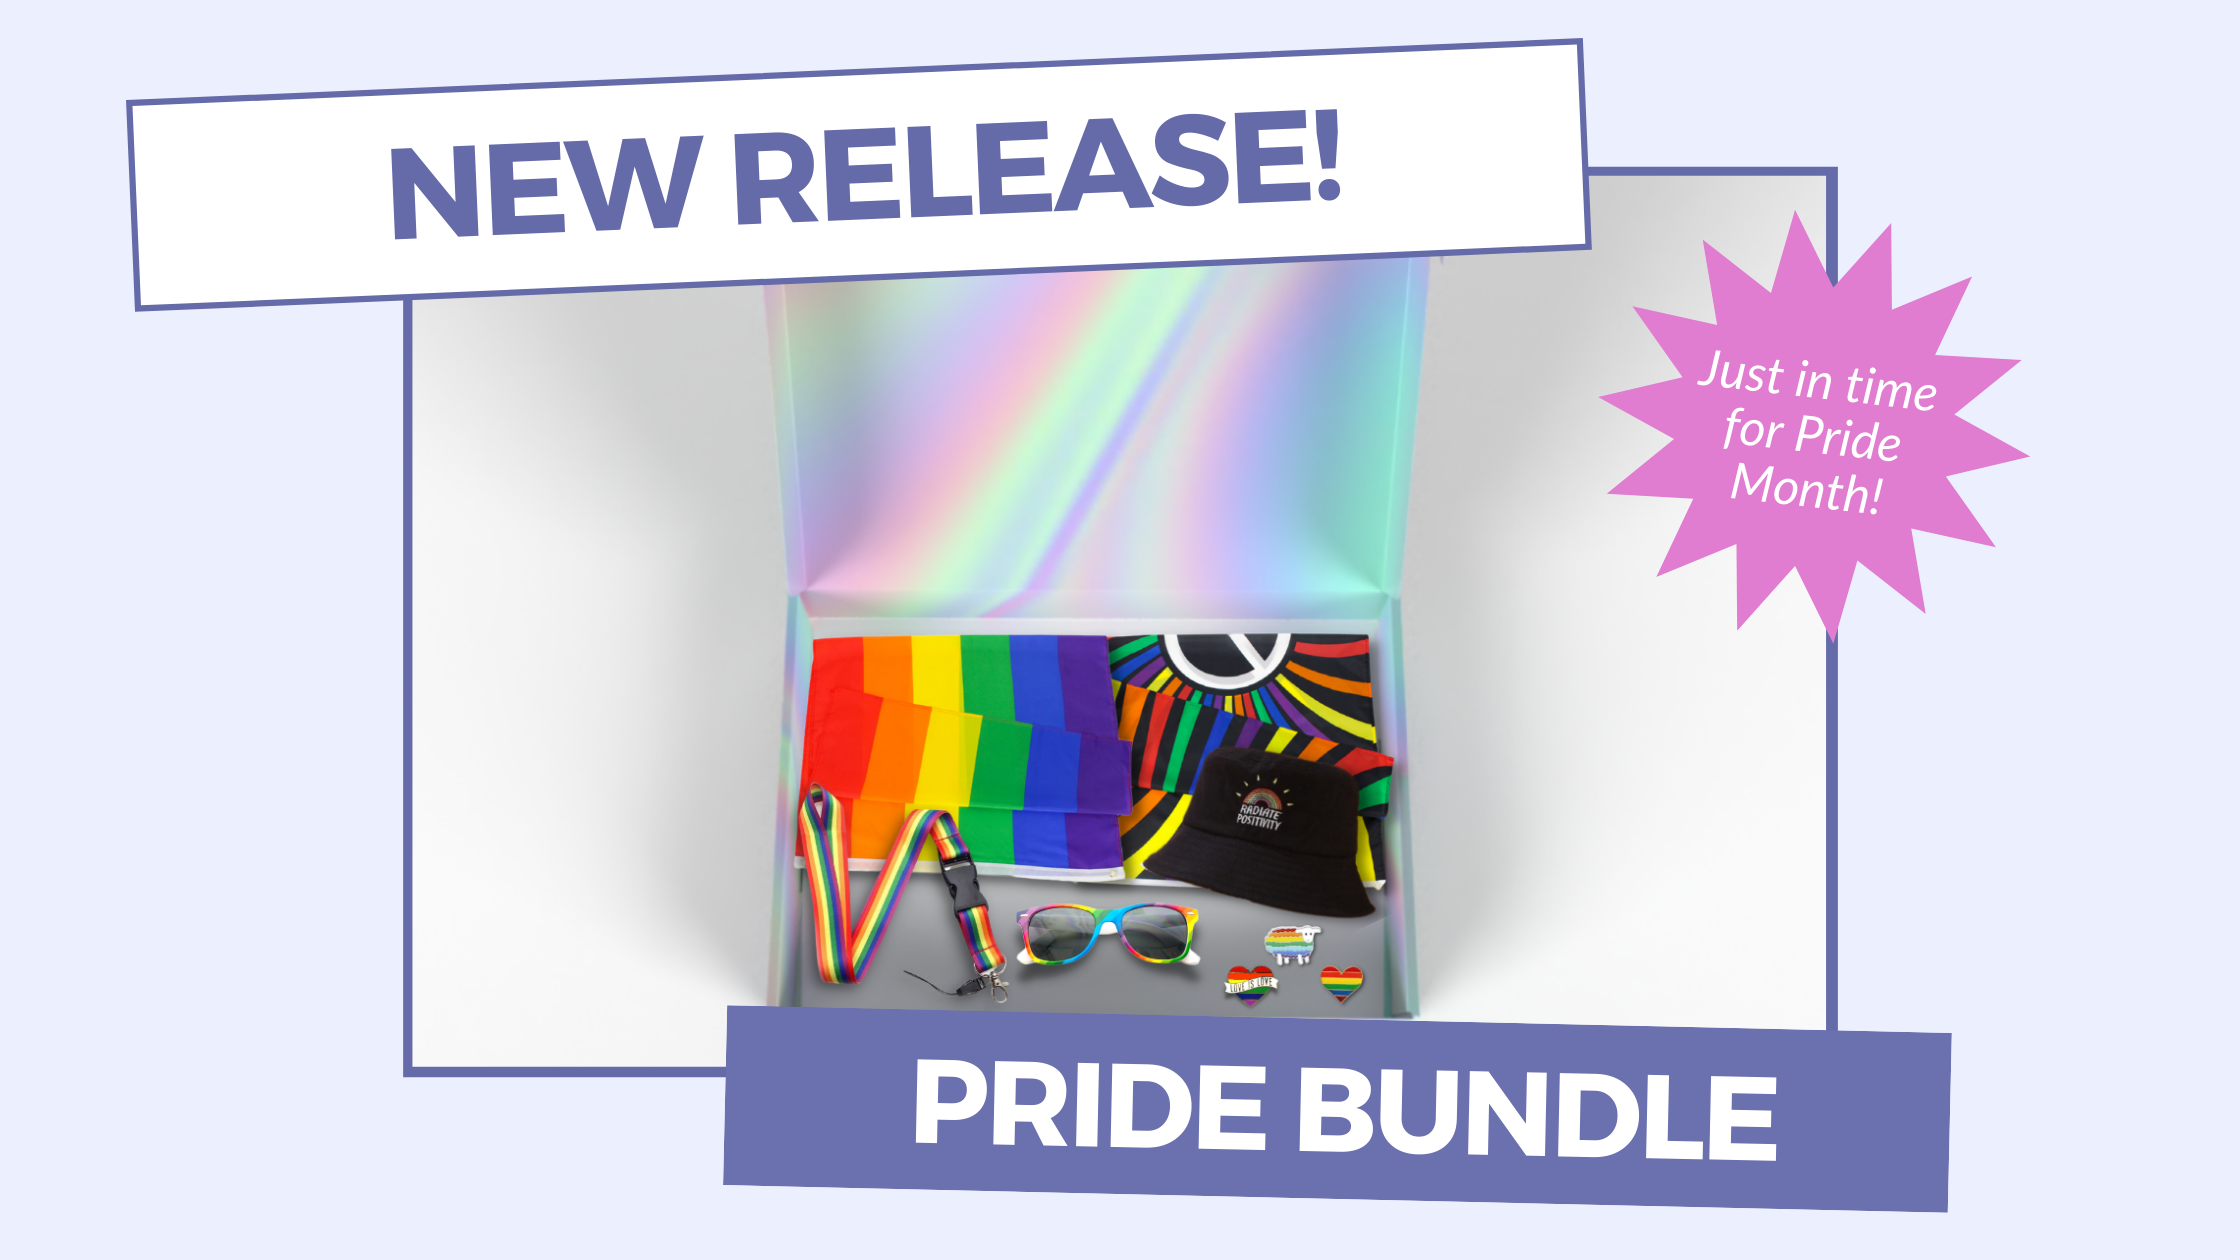 NEW RELEASE: The Pride Bundle